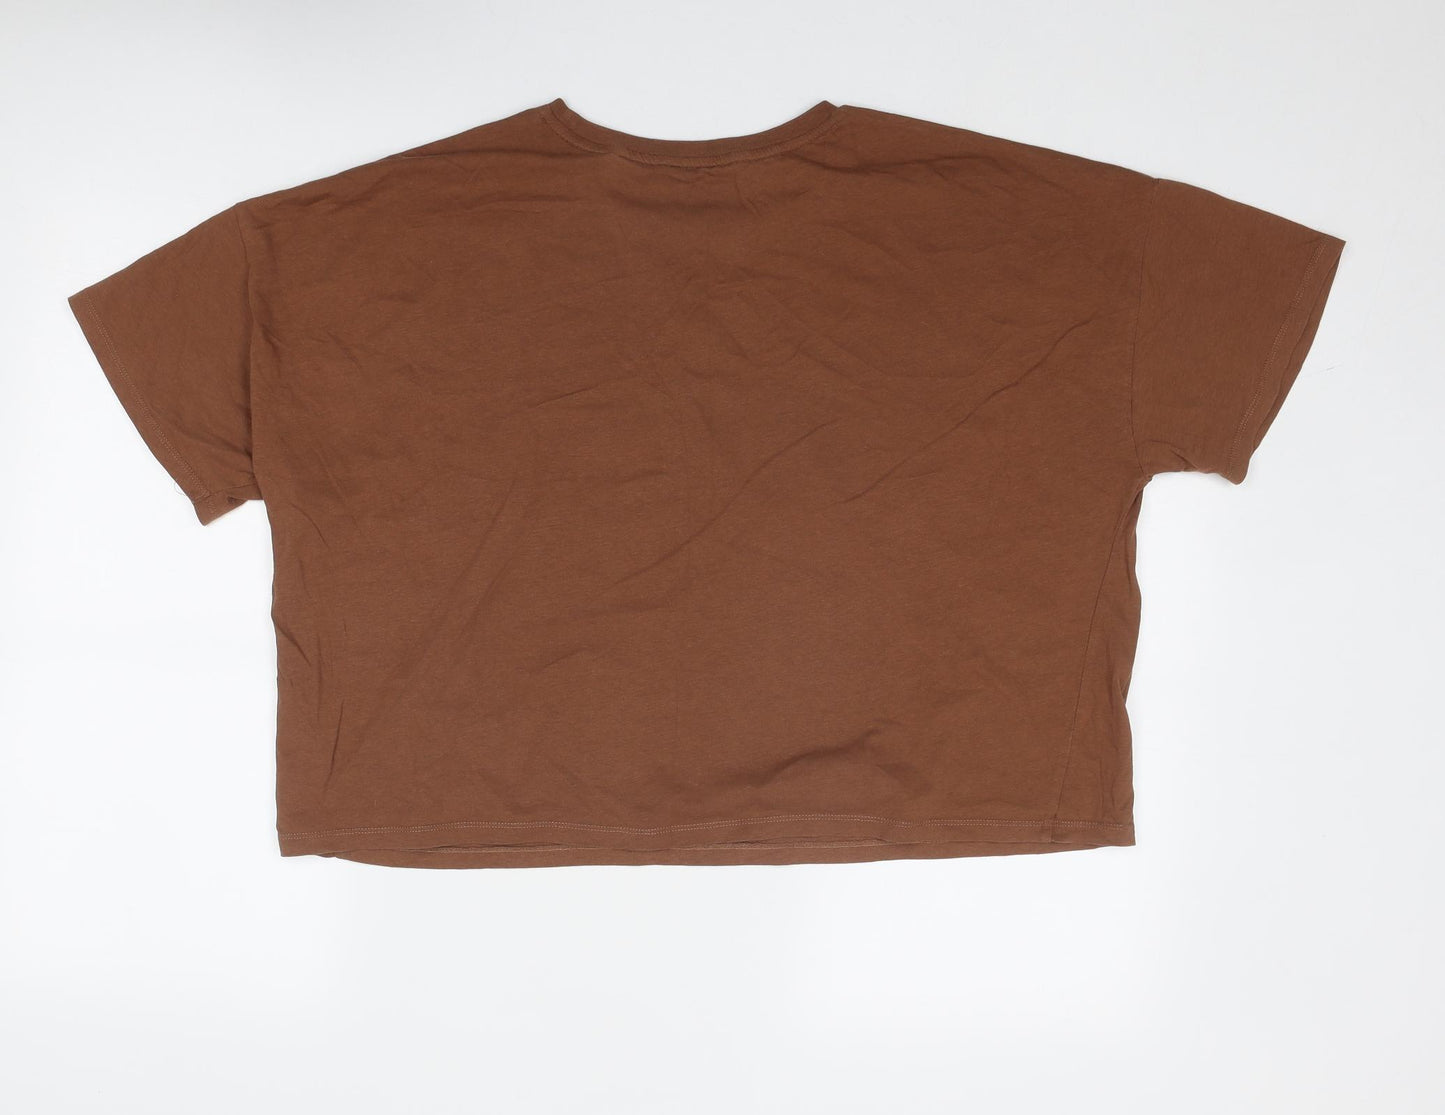 Bambi Womens Brown Cotton Basic T-Shirt Size 12 Round Neck - Size 12-14